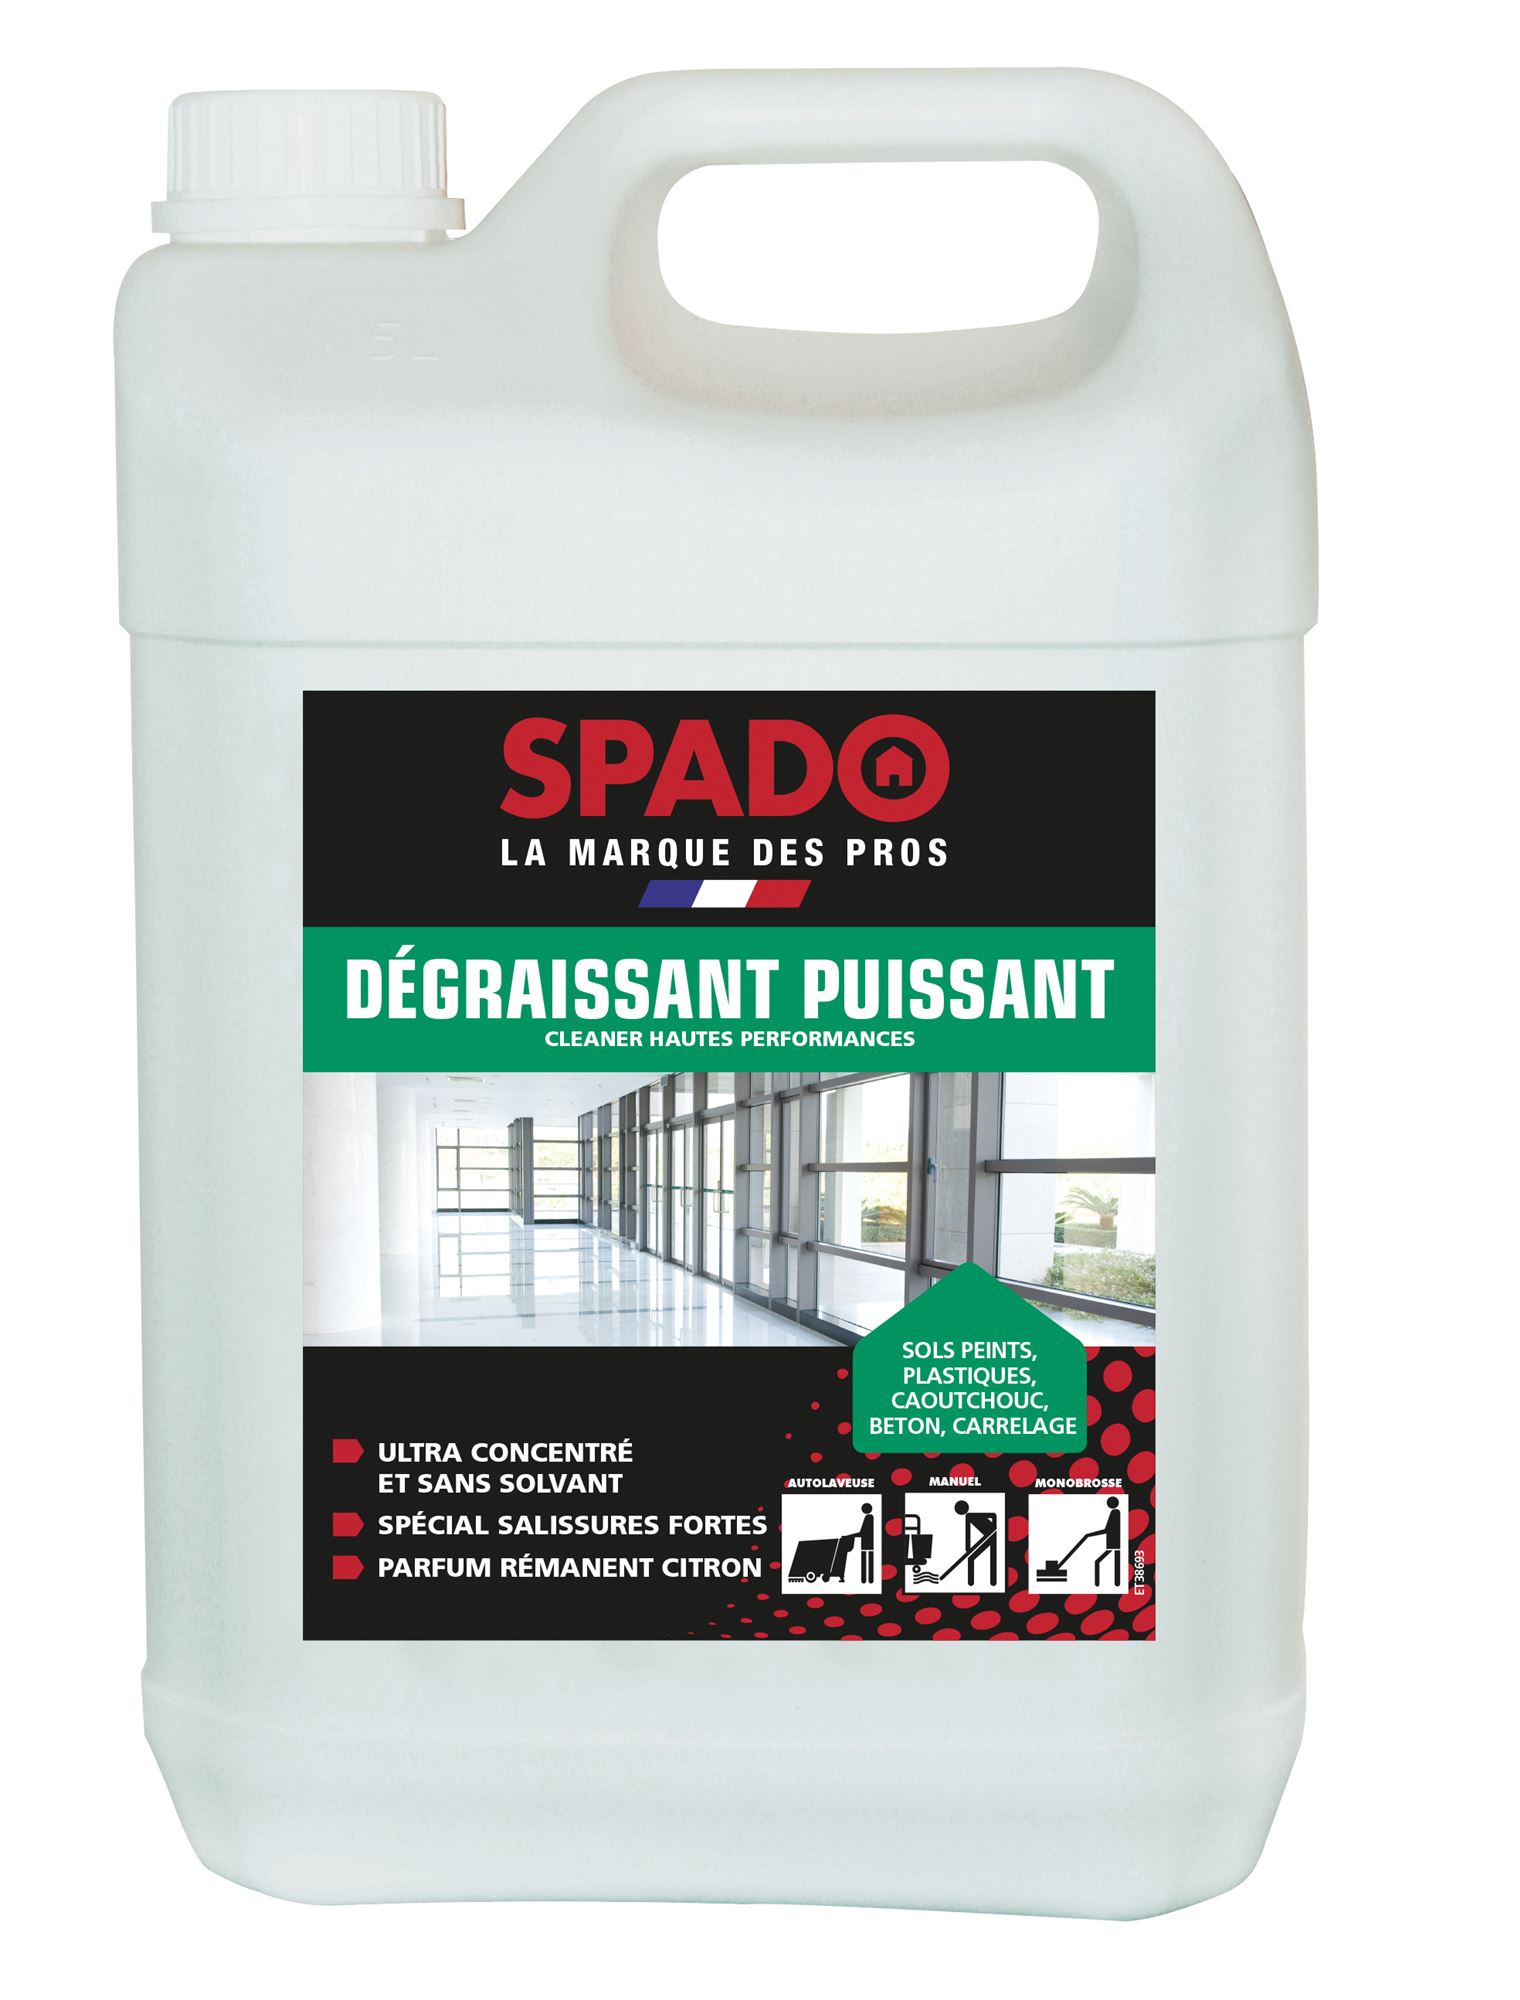 Spado powerful professional floor degreaser - Voussert